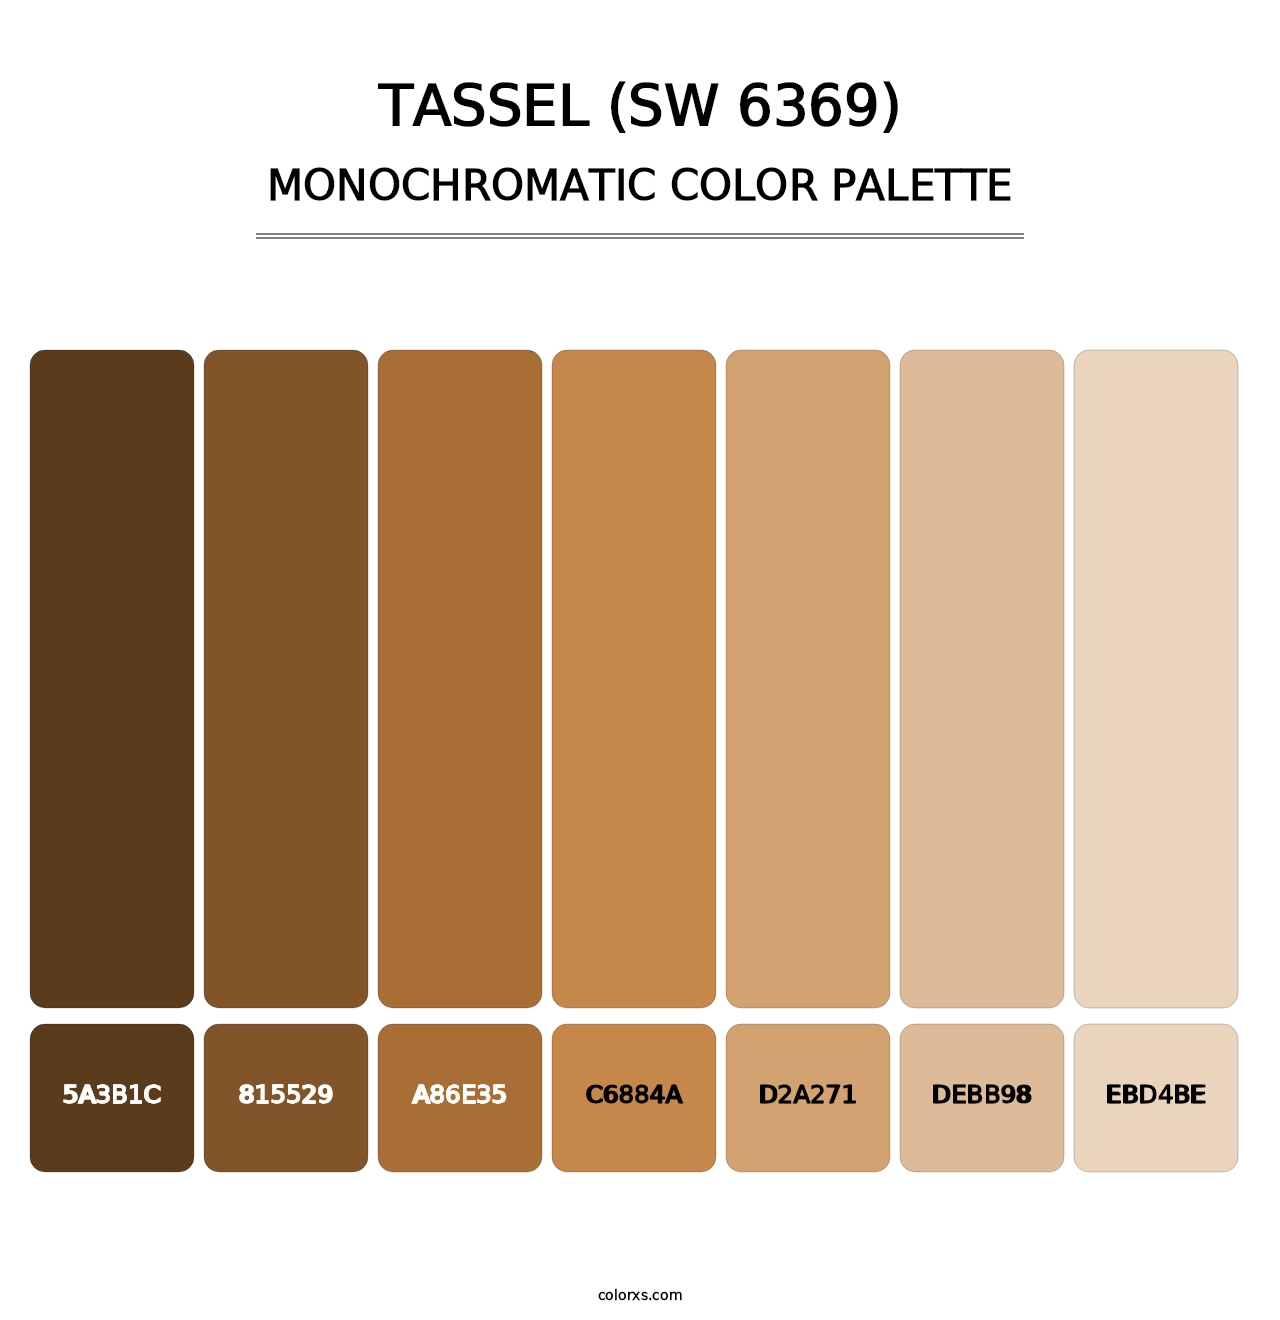 Tassel (SW 6369) - Monochromatic Color Palette